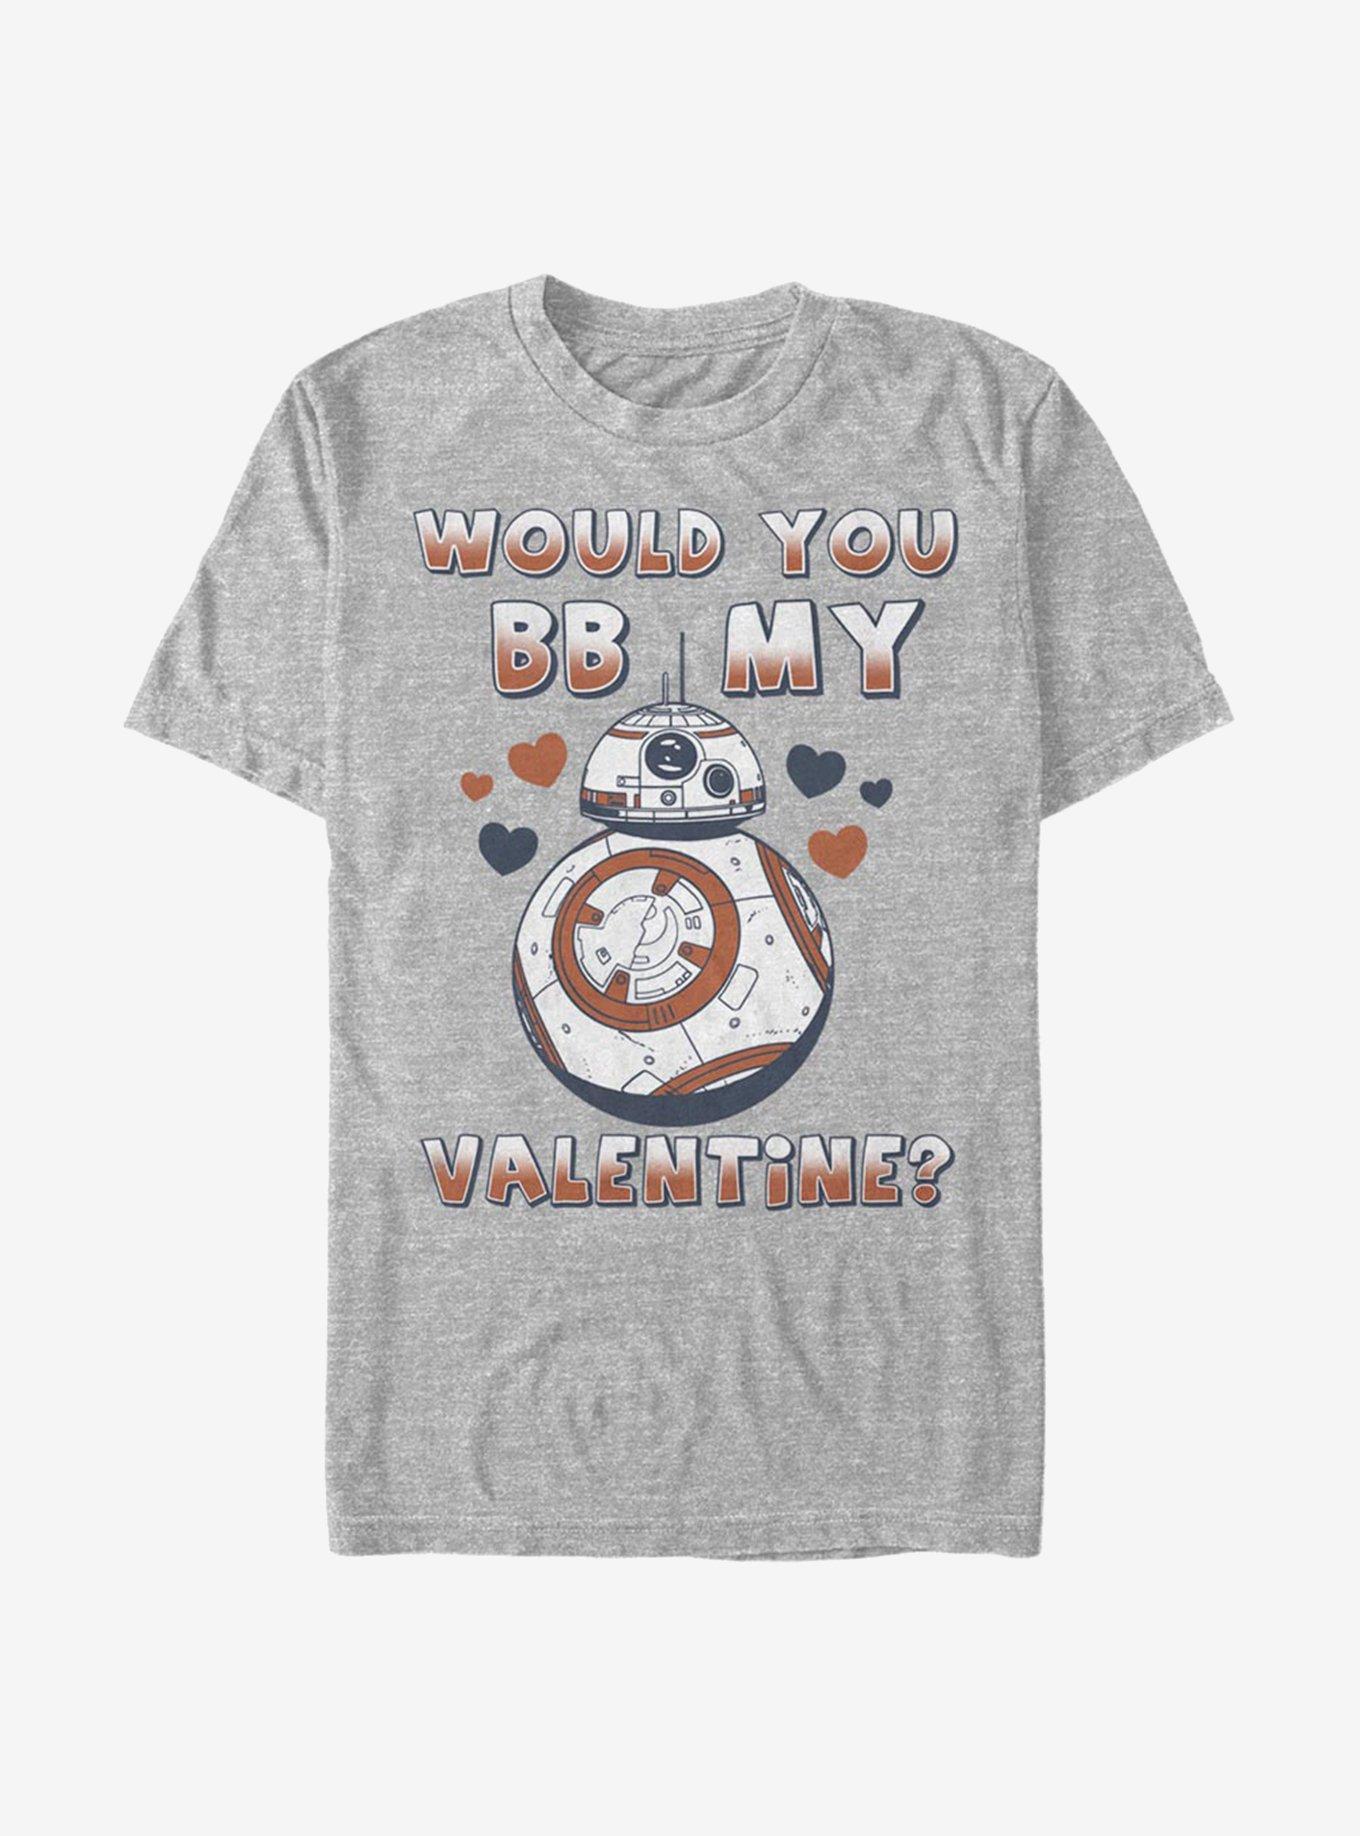 Star Wars: The Force Awakens BB-8 My Valentine T-Shirt